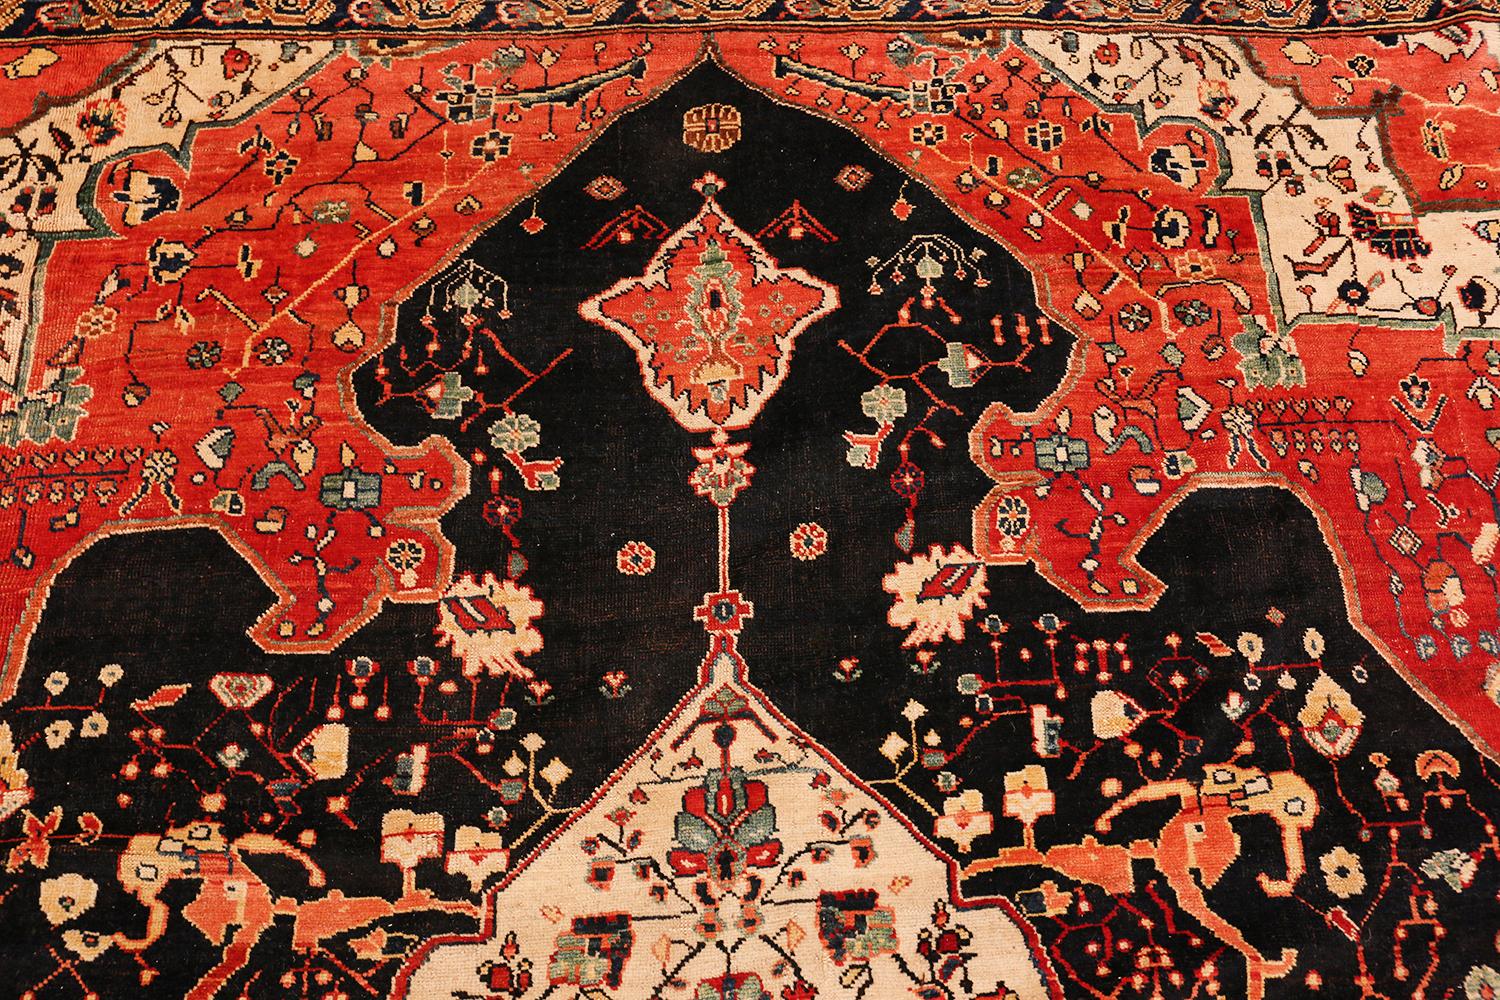 Antique Persian Bakhtiari Rug. Size: 11 ft 8 in x 14 ft (3.56 m x 4.27 m) (Handgeknüpft)